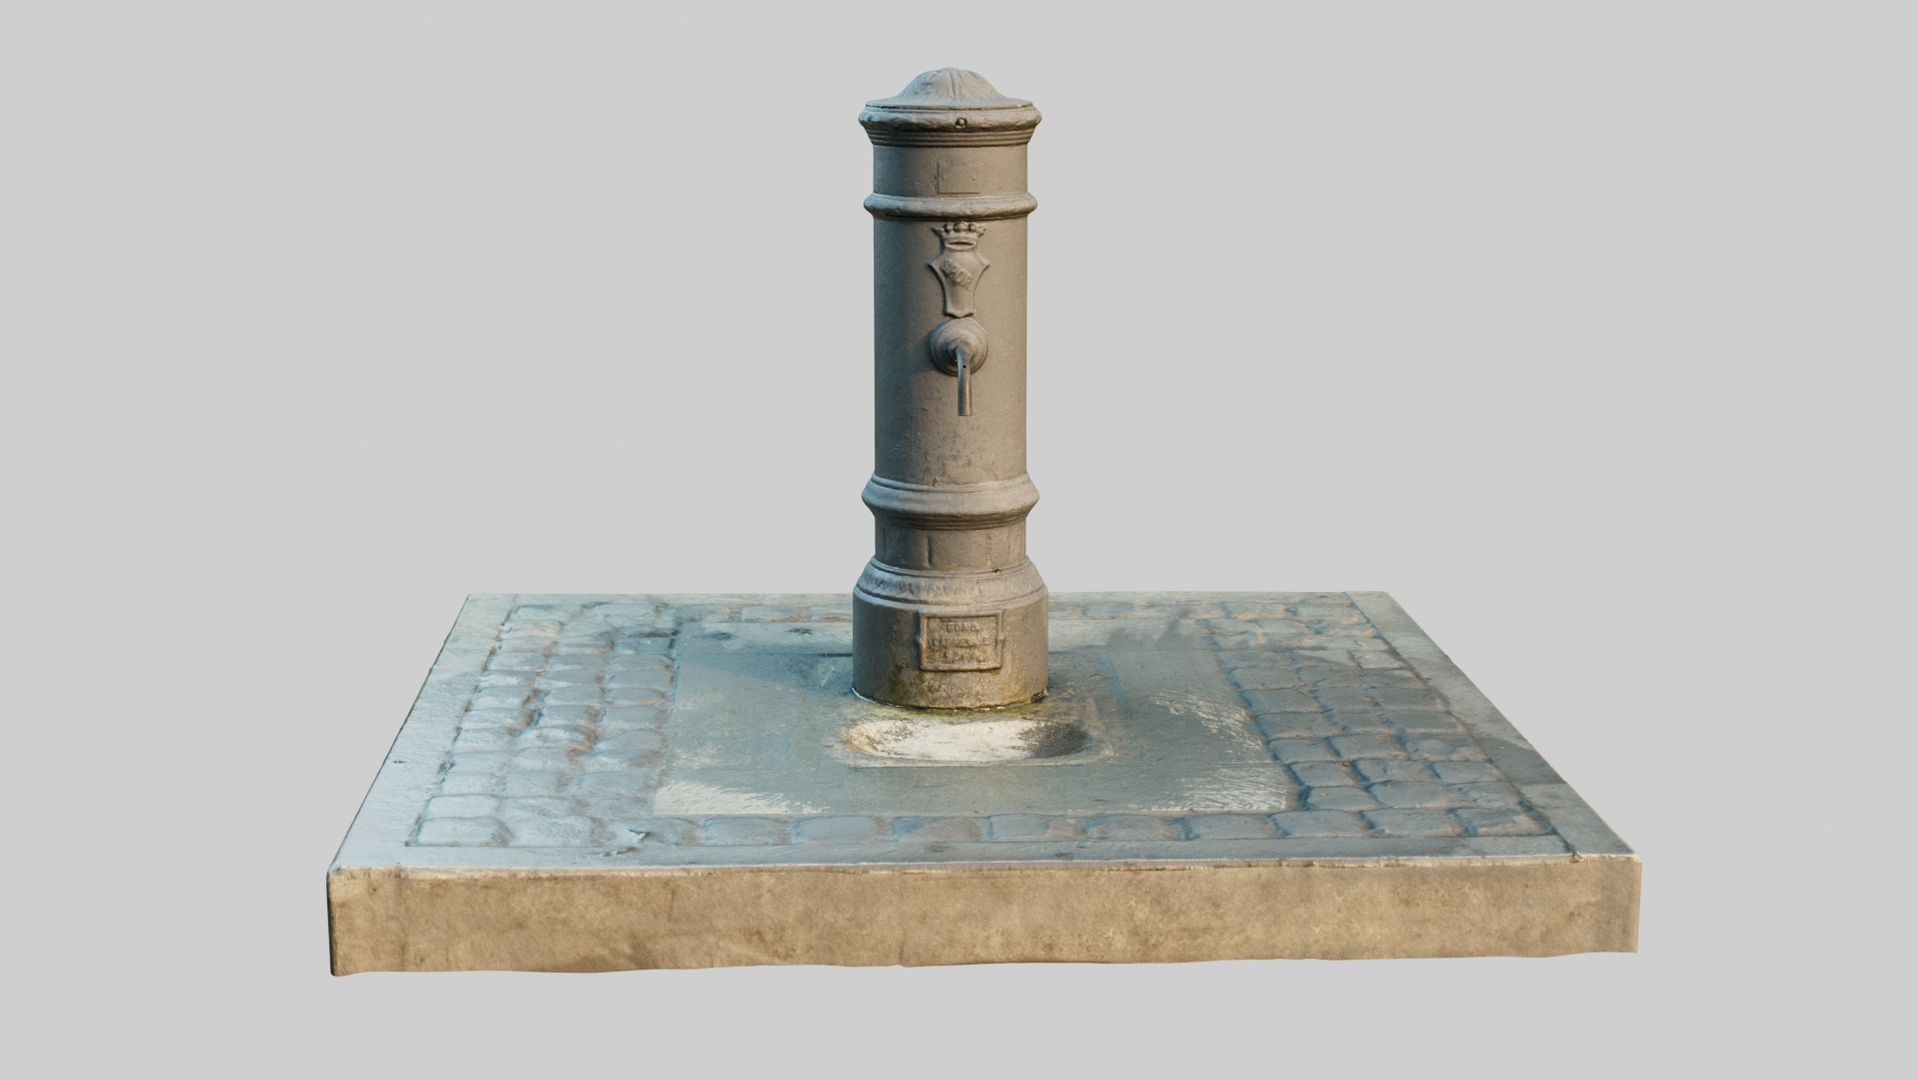 Roman Fountain Nasone 3D model https://p.turbosquid.com/ts-thumb/Km/VjTvYW/bI/turntable_short/jpg/1702246486/1920x1080/turn_fit_q99/3f42eed47e3658192b97a05fb8ae5180f0aa17dd/turntable_short-1.jpg